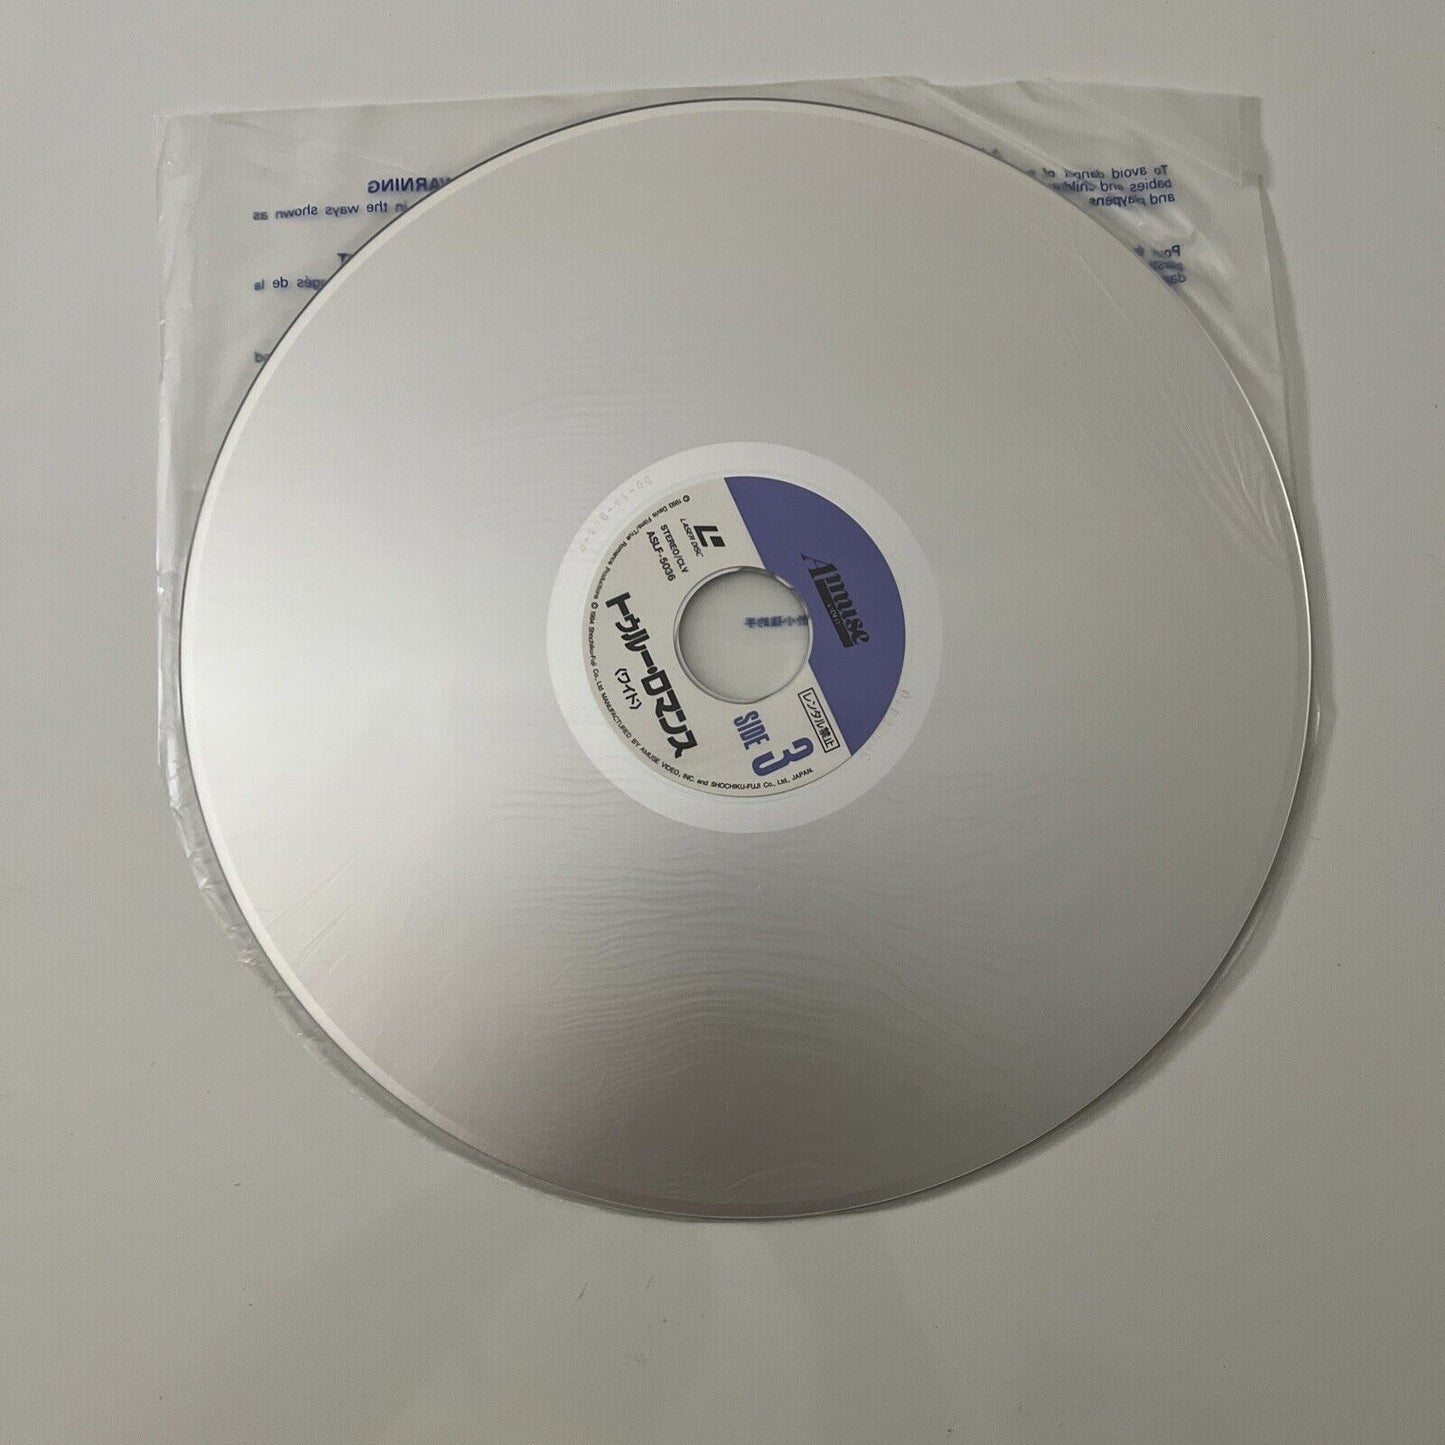 True Romance - LaserDisc (LD, 1993) Christian Slater  Gatefold with Obi